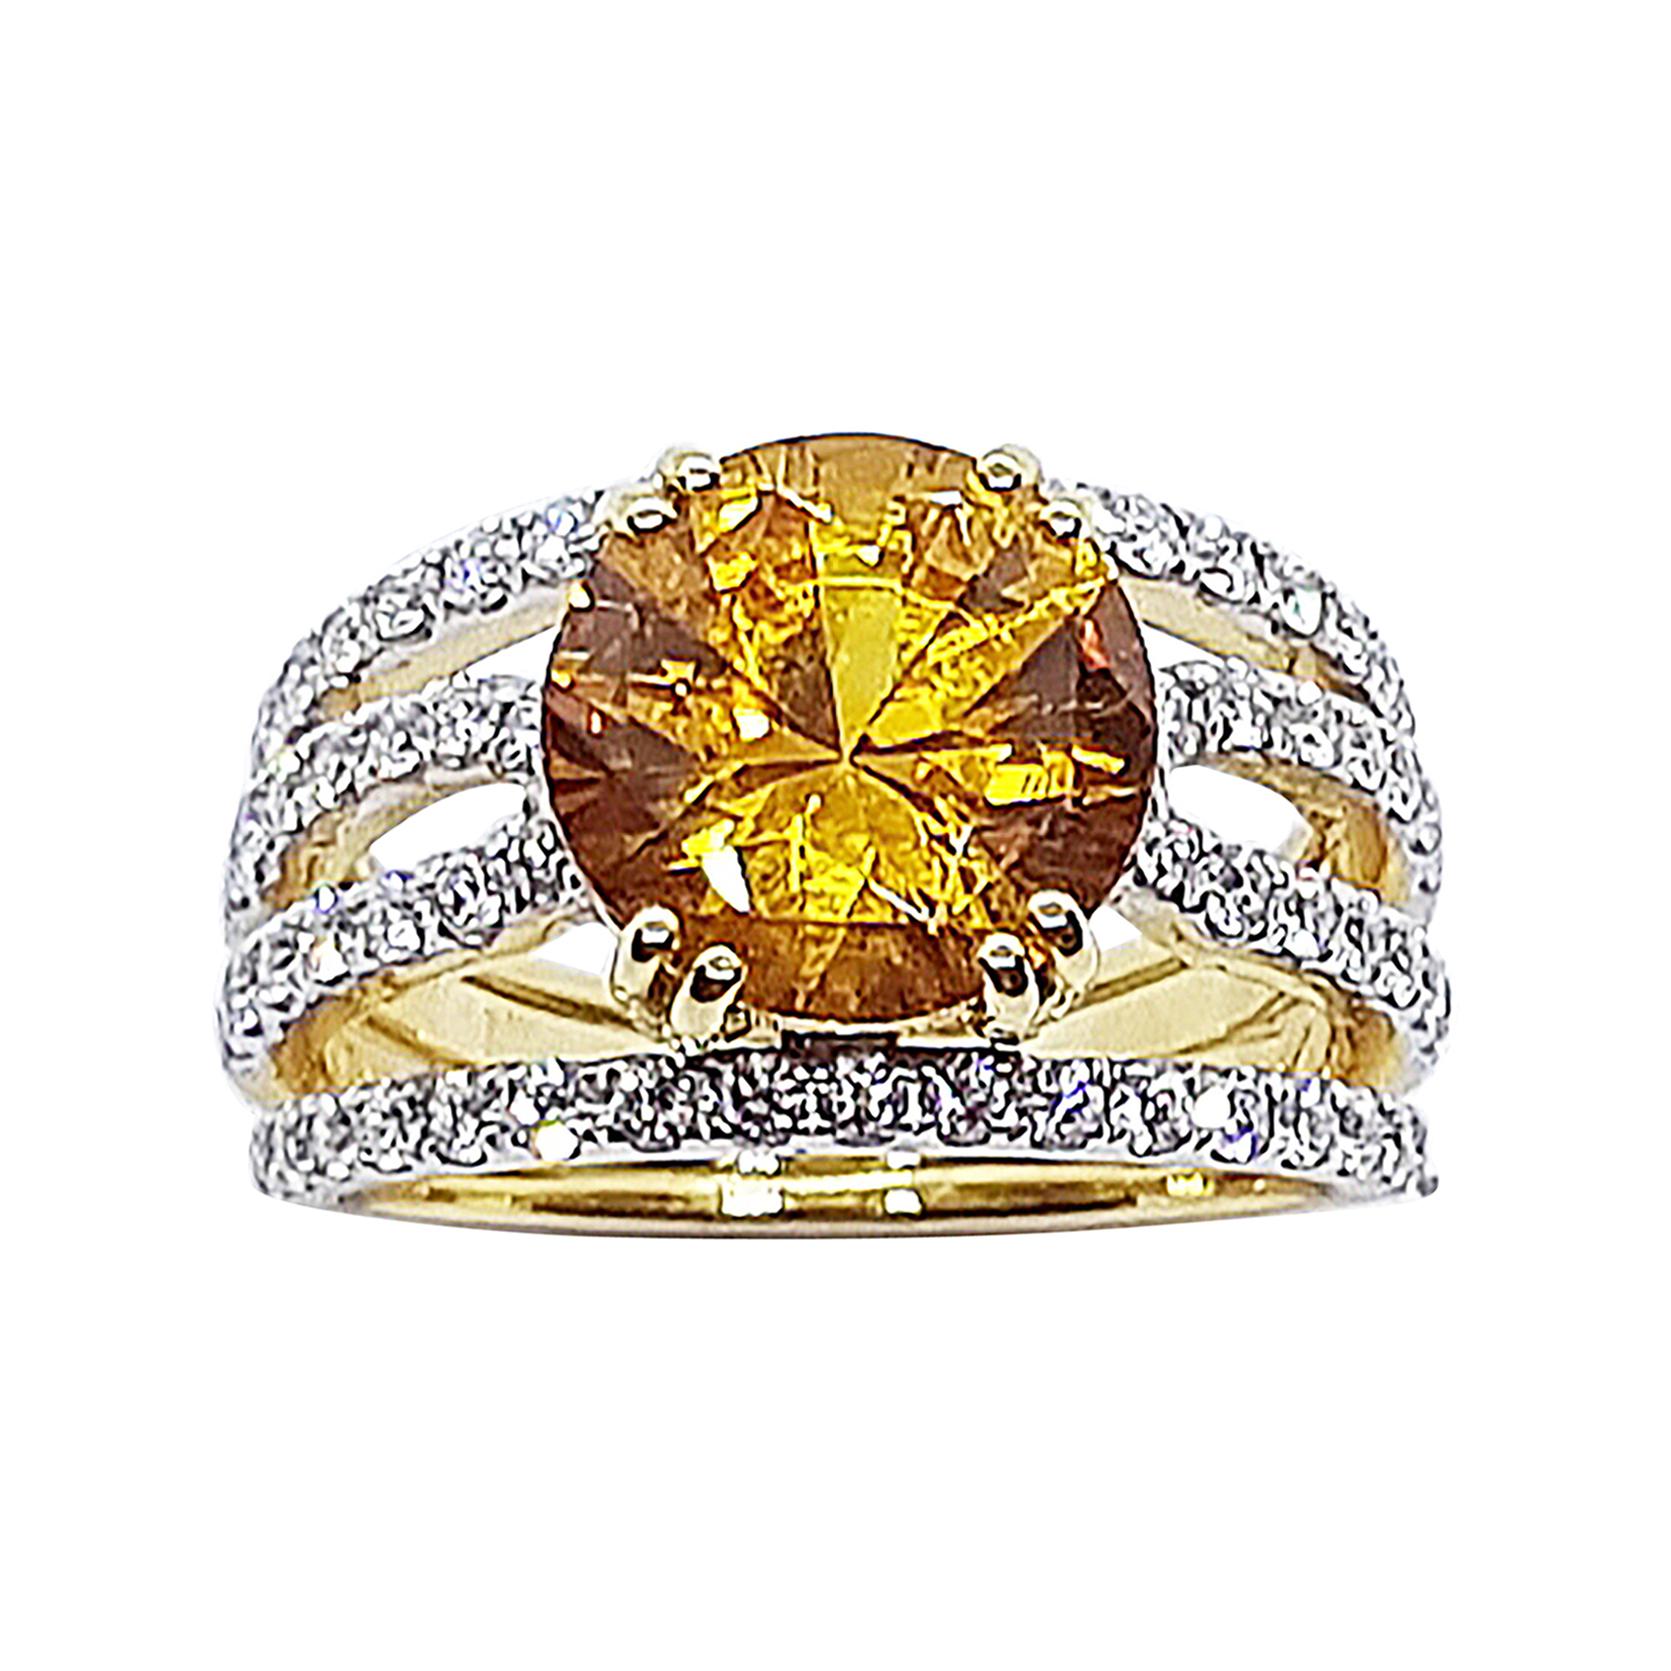 Round Yellow Sapphire with Diamond Set in 18 Karat Gold Settings